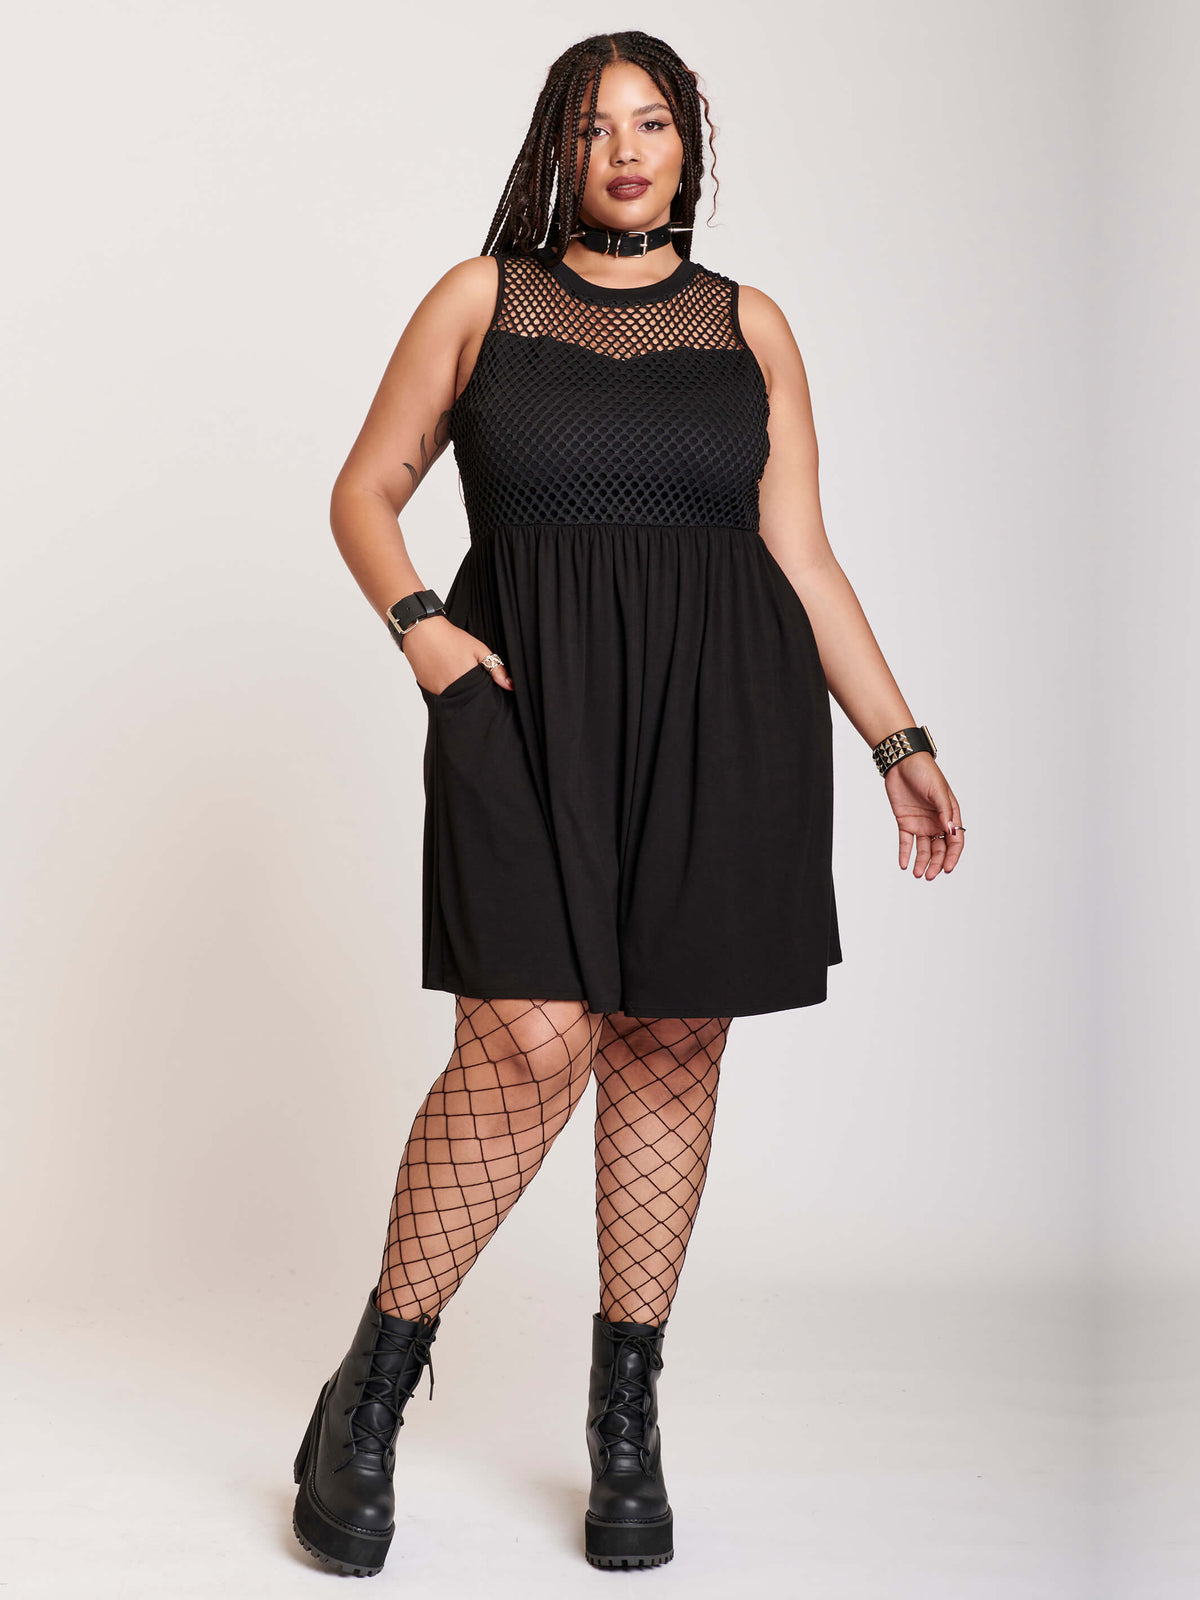 Black fishnet dress with pockets